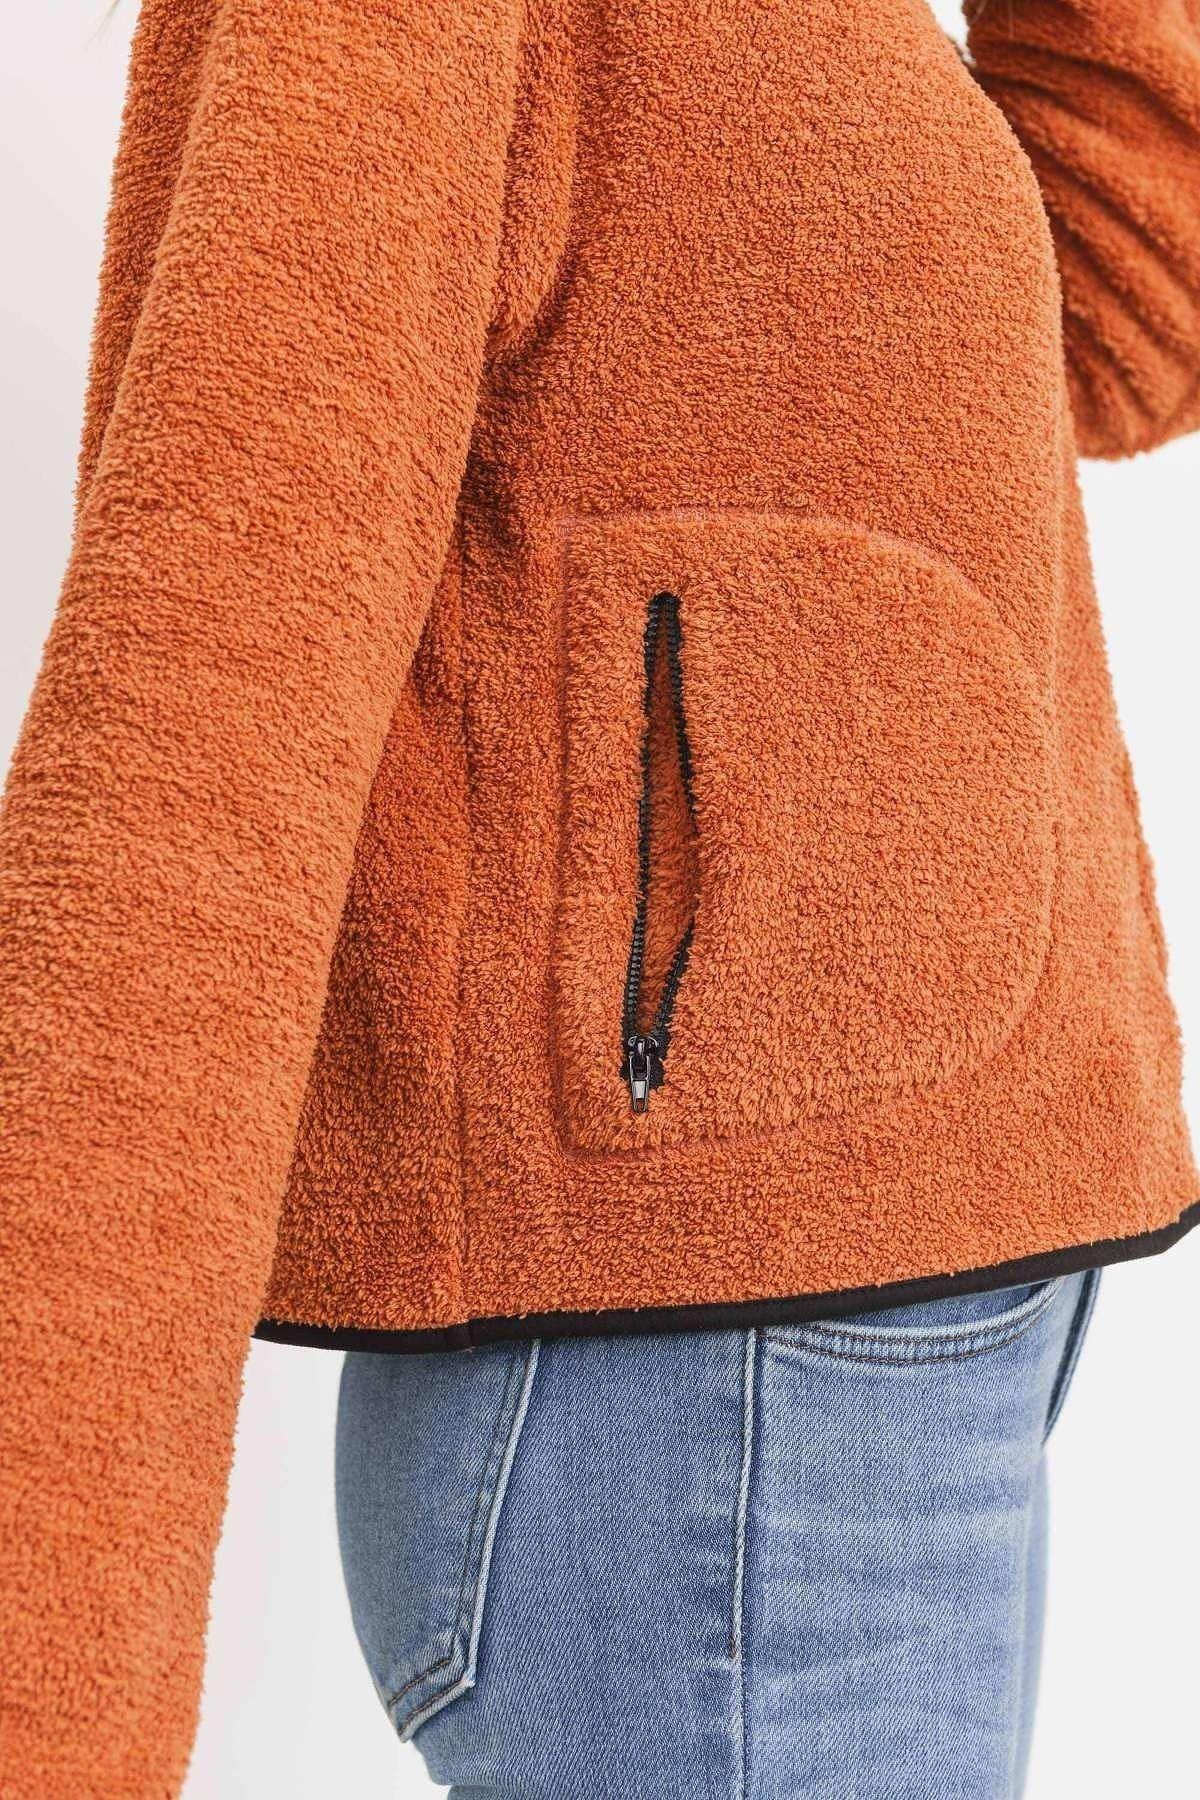 Long Sleeve Half Zipper Pullover Loopie Terry Jacket - Kreative Passions